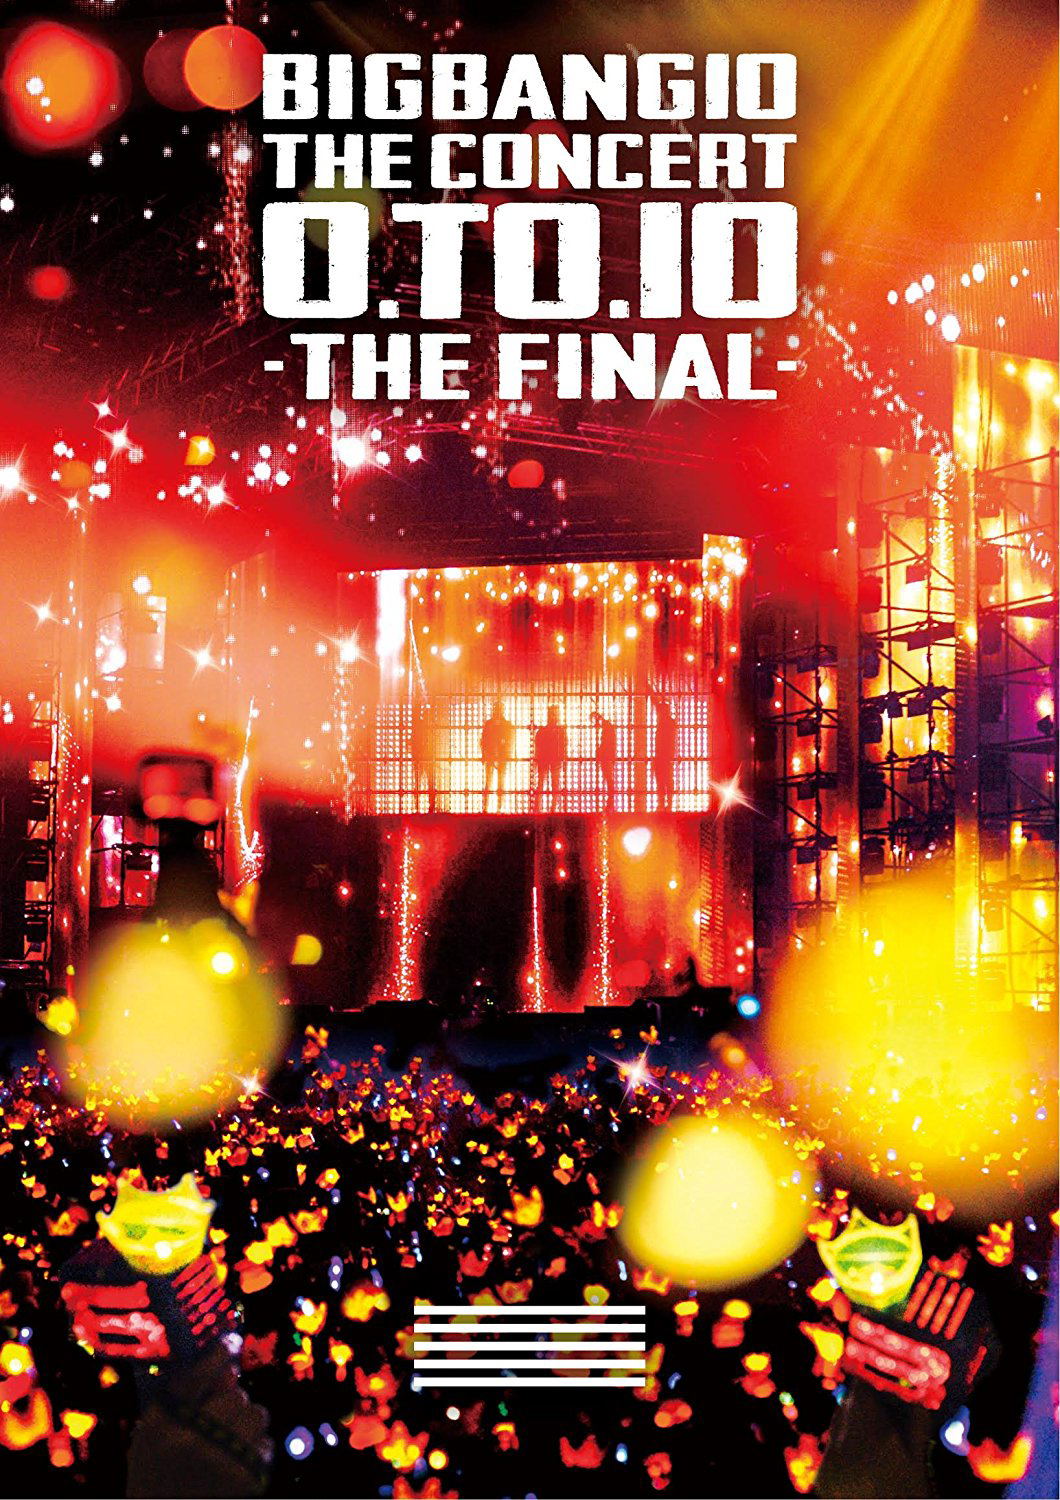 Bigbang10 The Concert: 0 To 10 - The Final